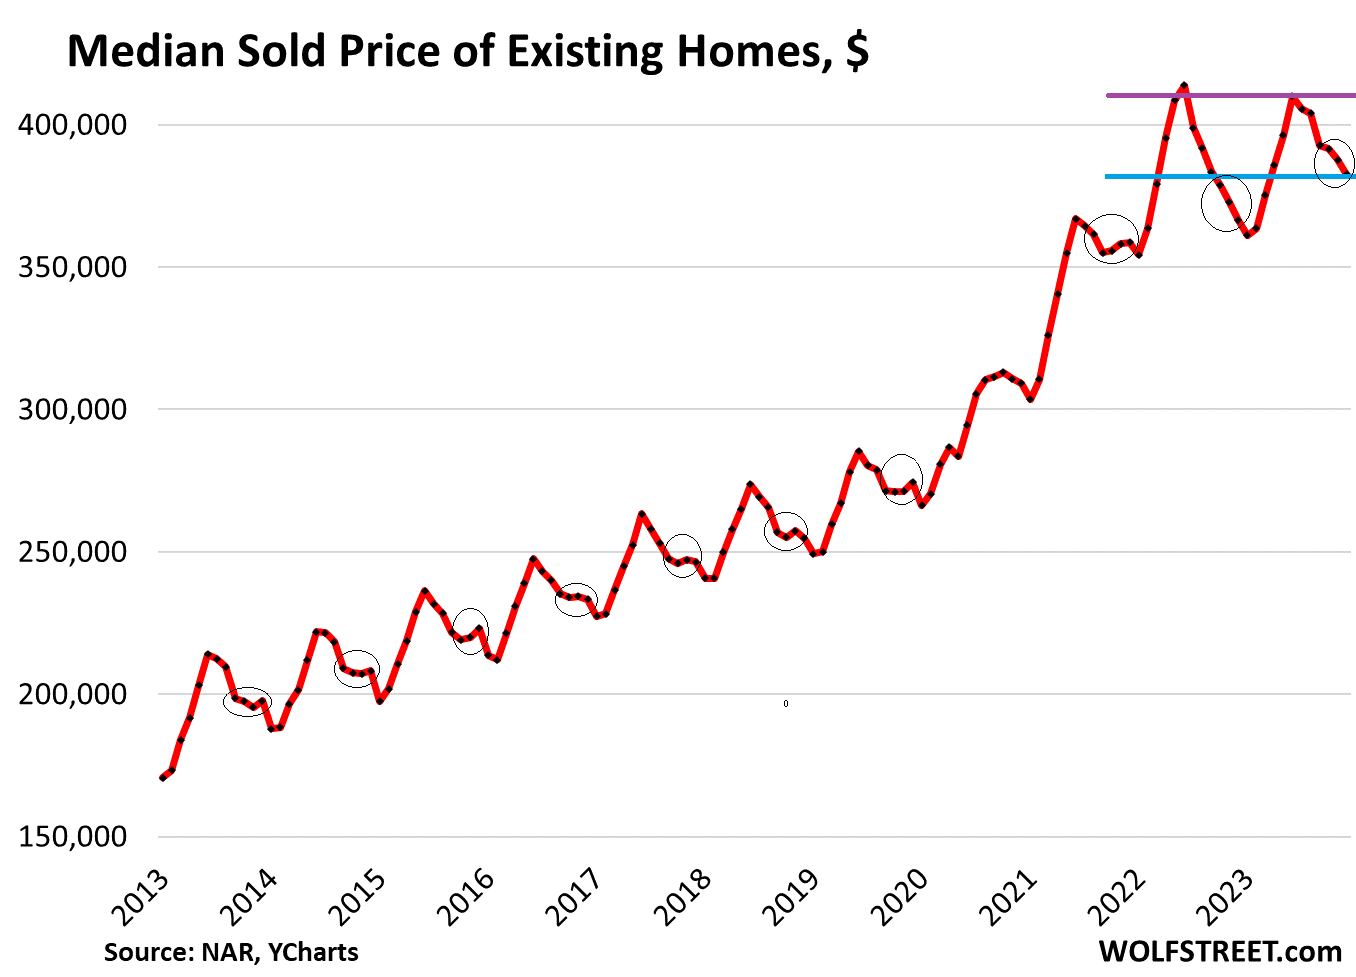 Austin Housing Market Prices Are Surging. Multi-Unit Housing Could Fix That.